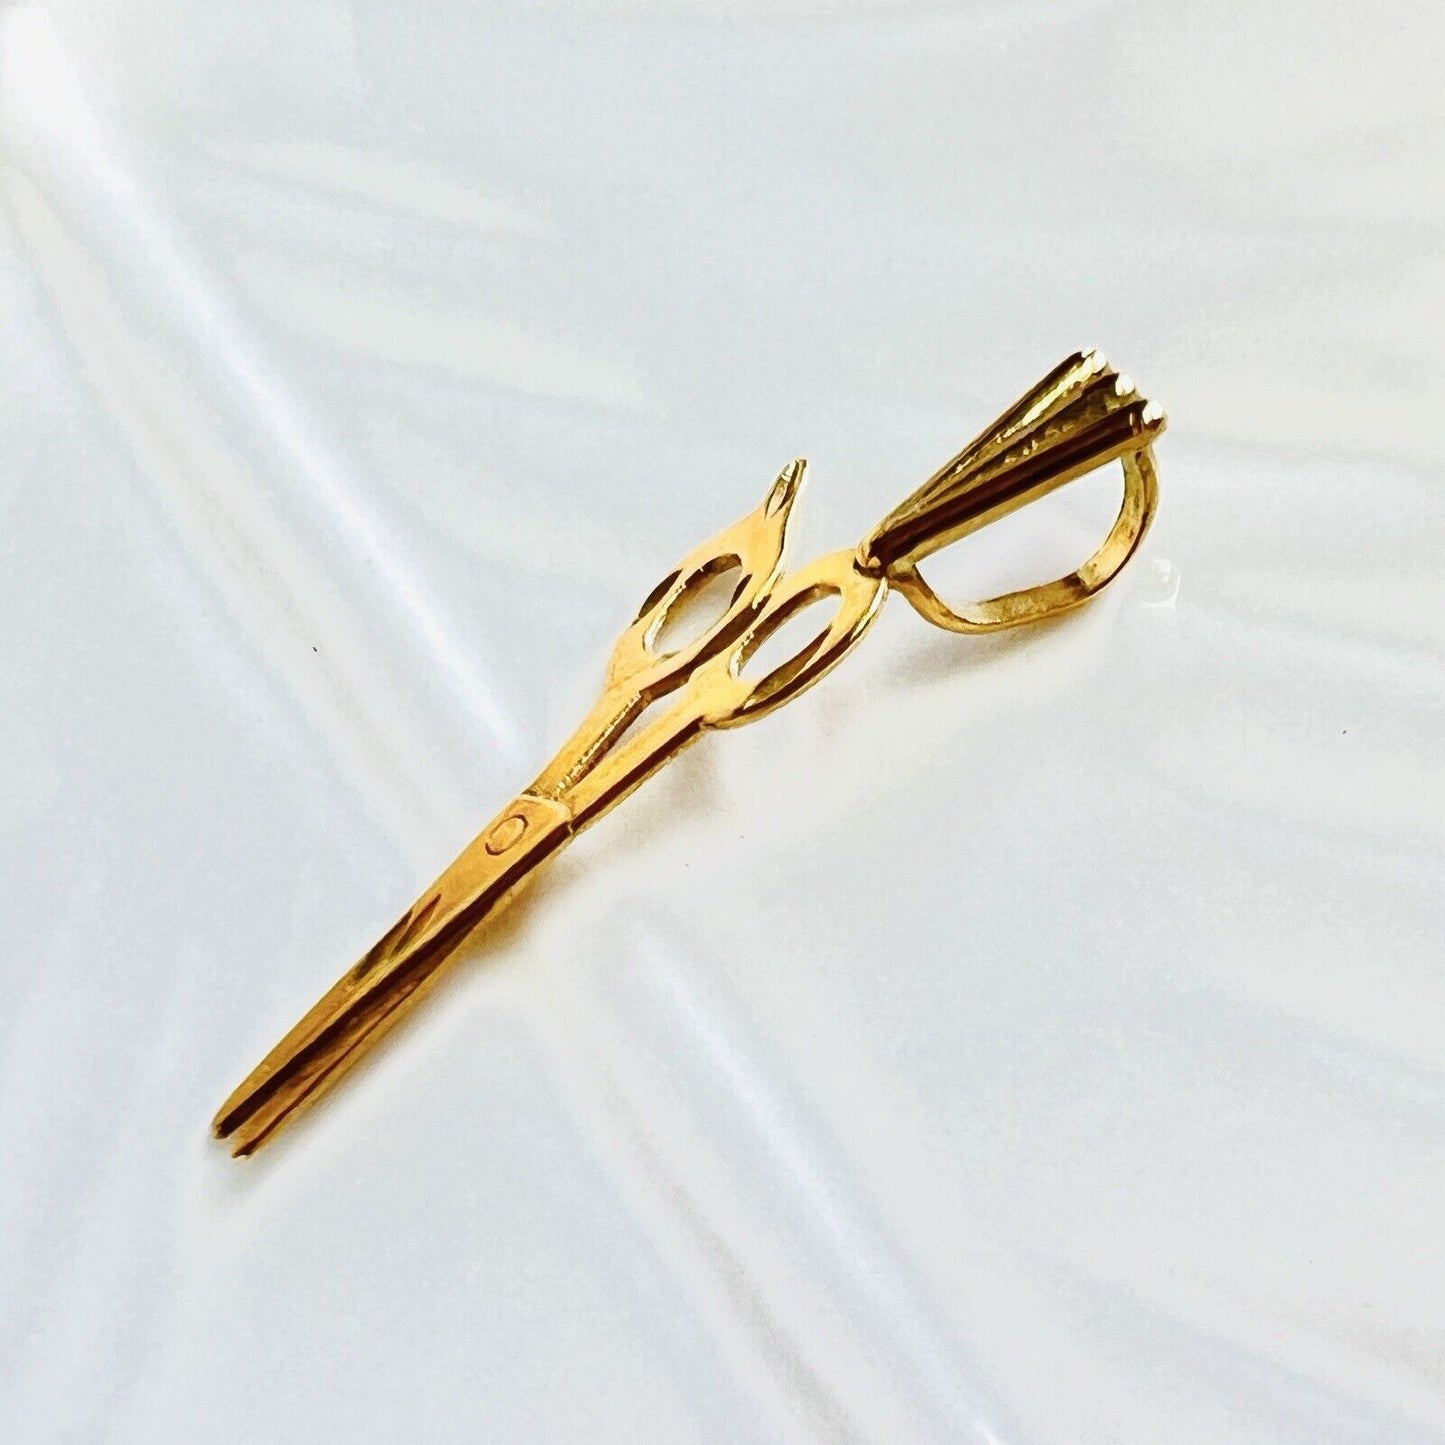 Solid 14k Yellow Gold Scissors Pendant/Charm, New